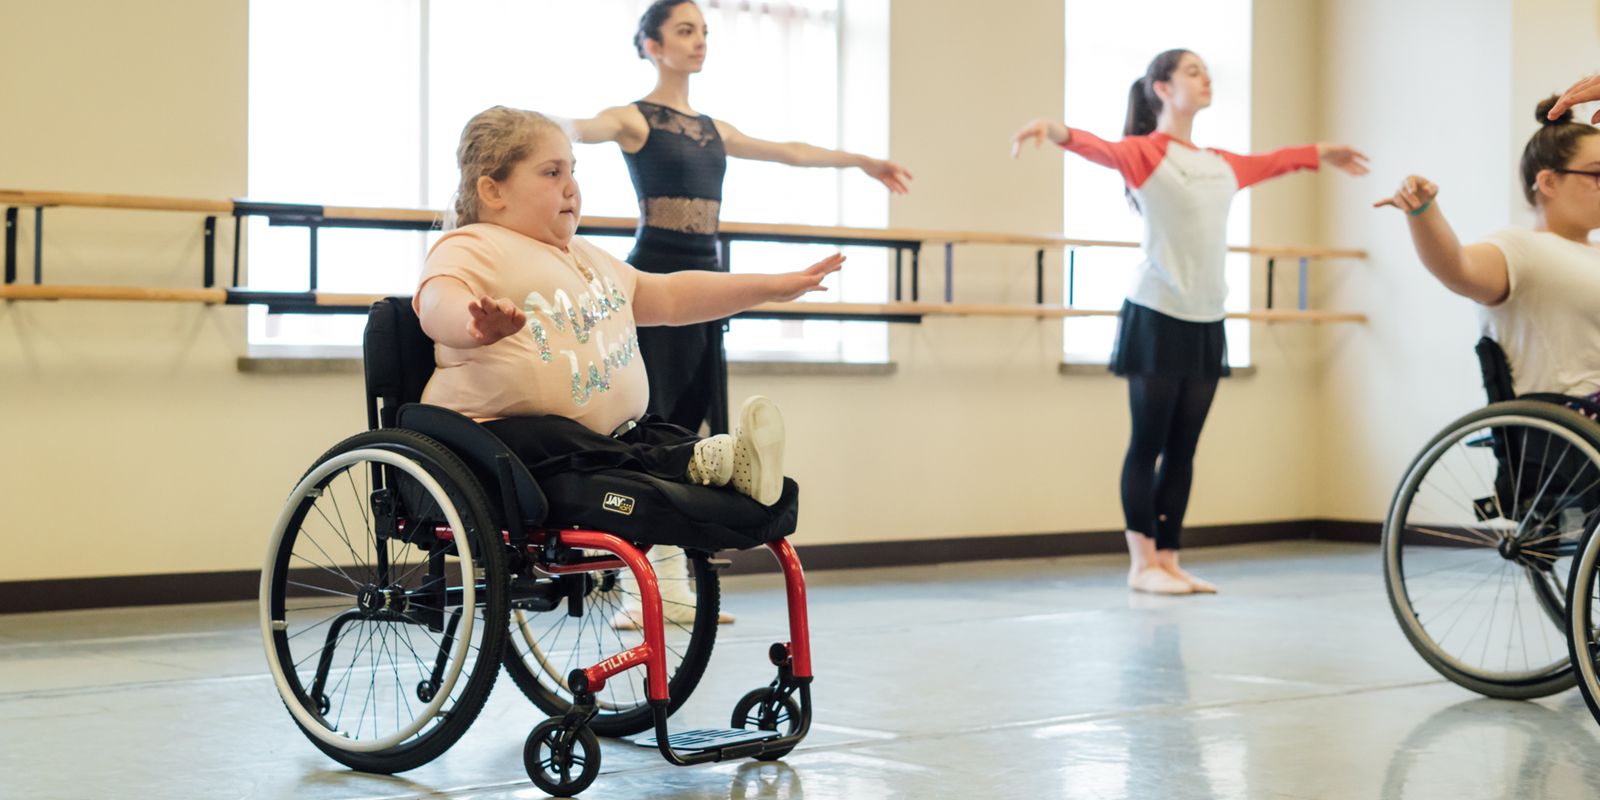 On wheelchair ballet